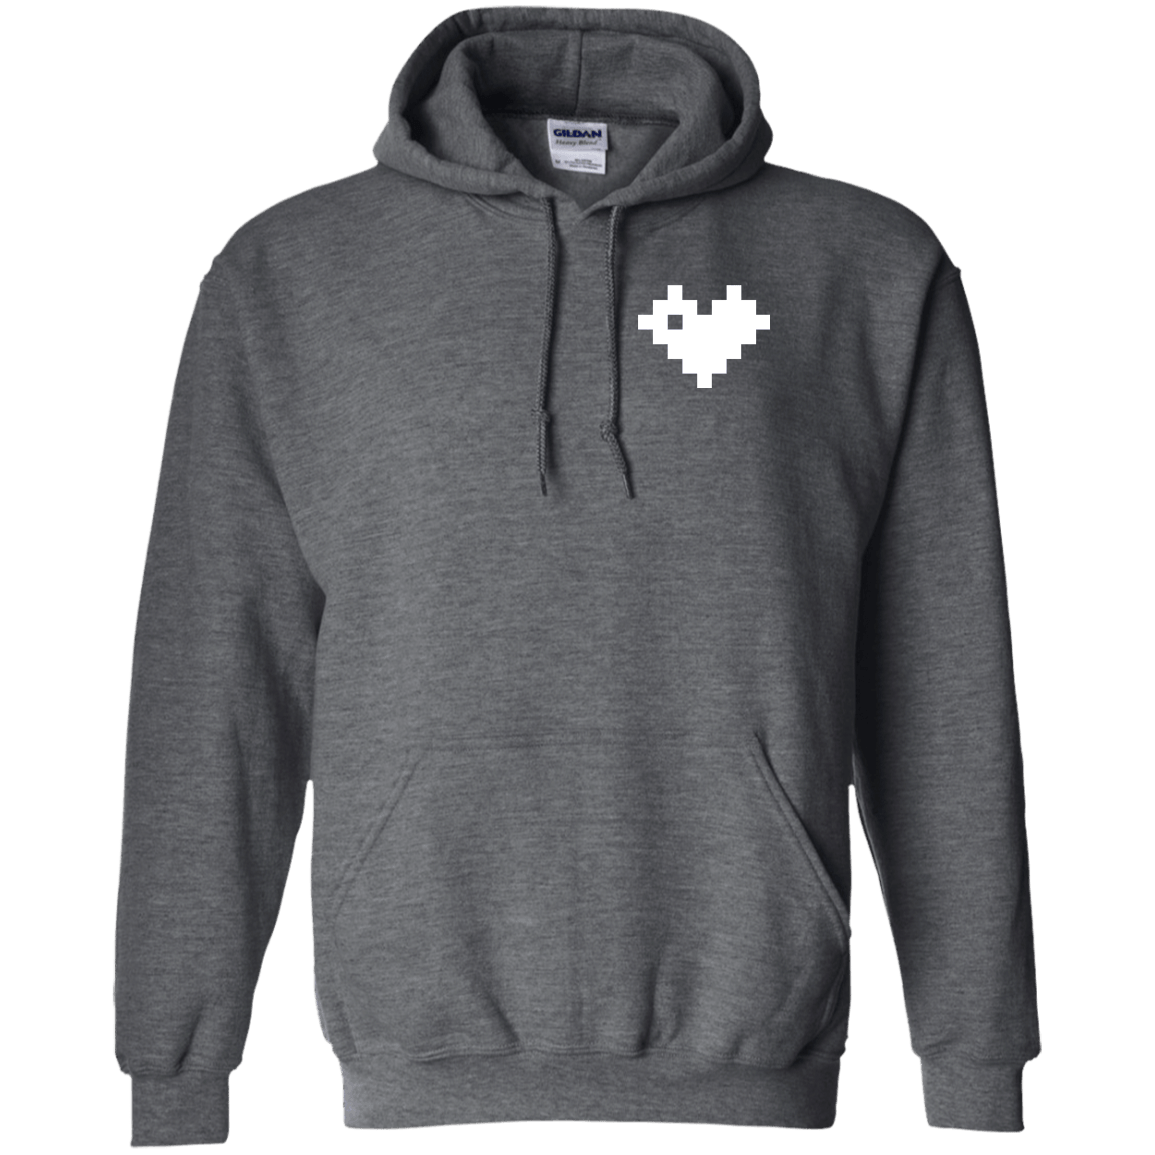 – Pixel 1 heart Tee++ | in No. Programming T-Shirts